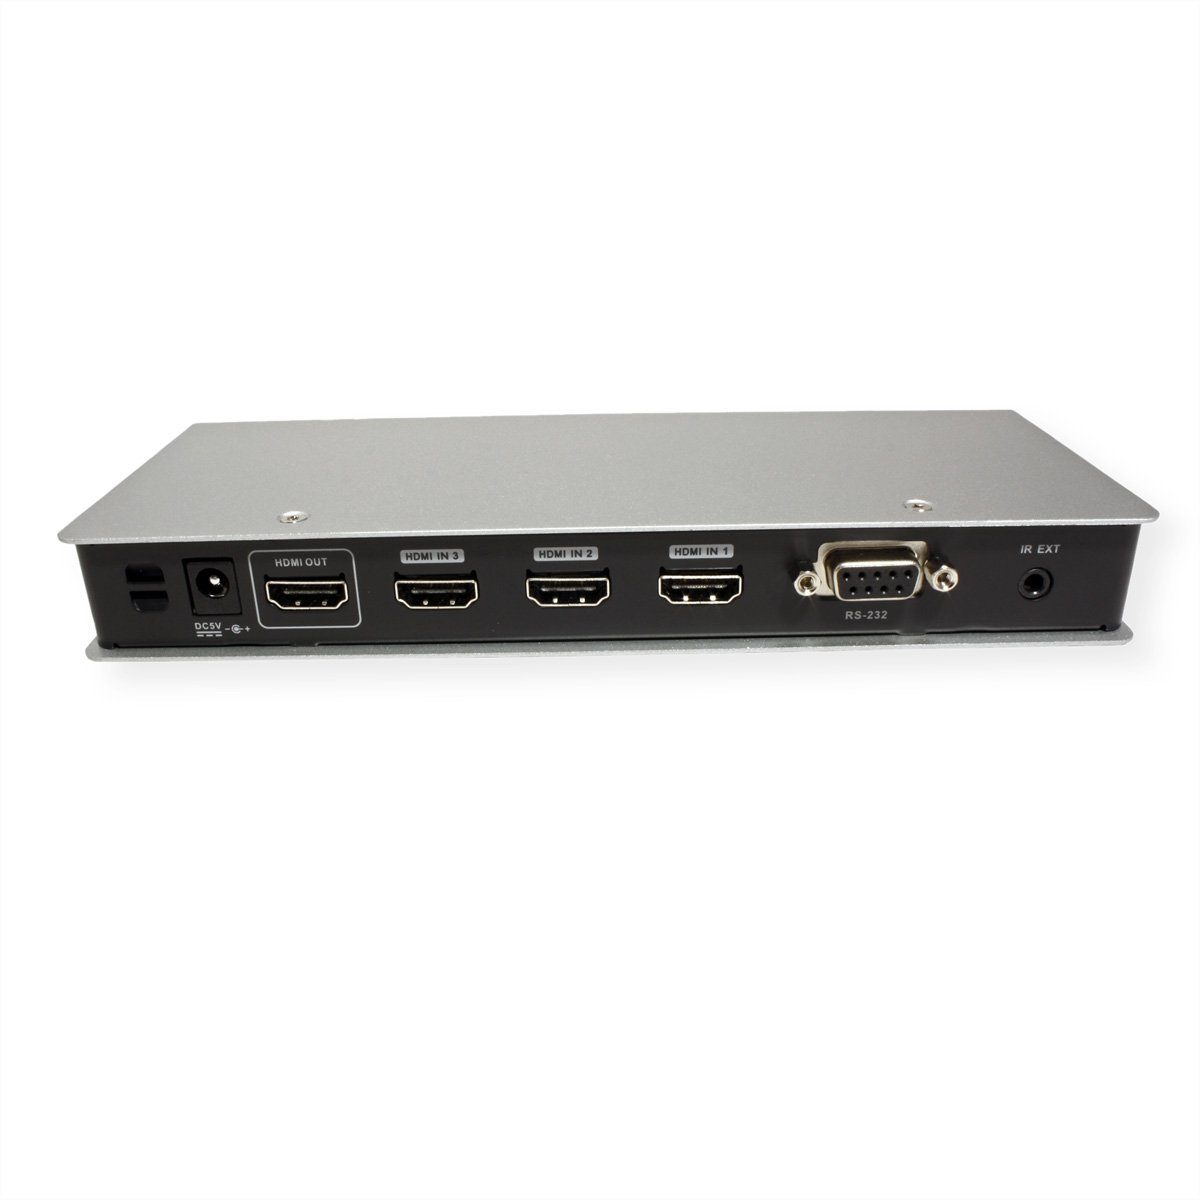 HD HDMI mit Aten VS481B Ultra 4K 4 Switch Ports Audio- Video-Adapter &